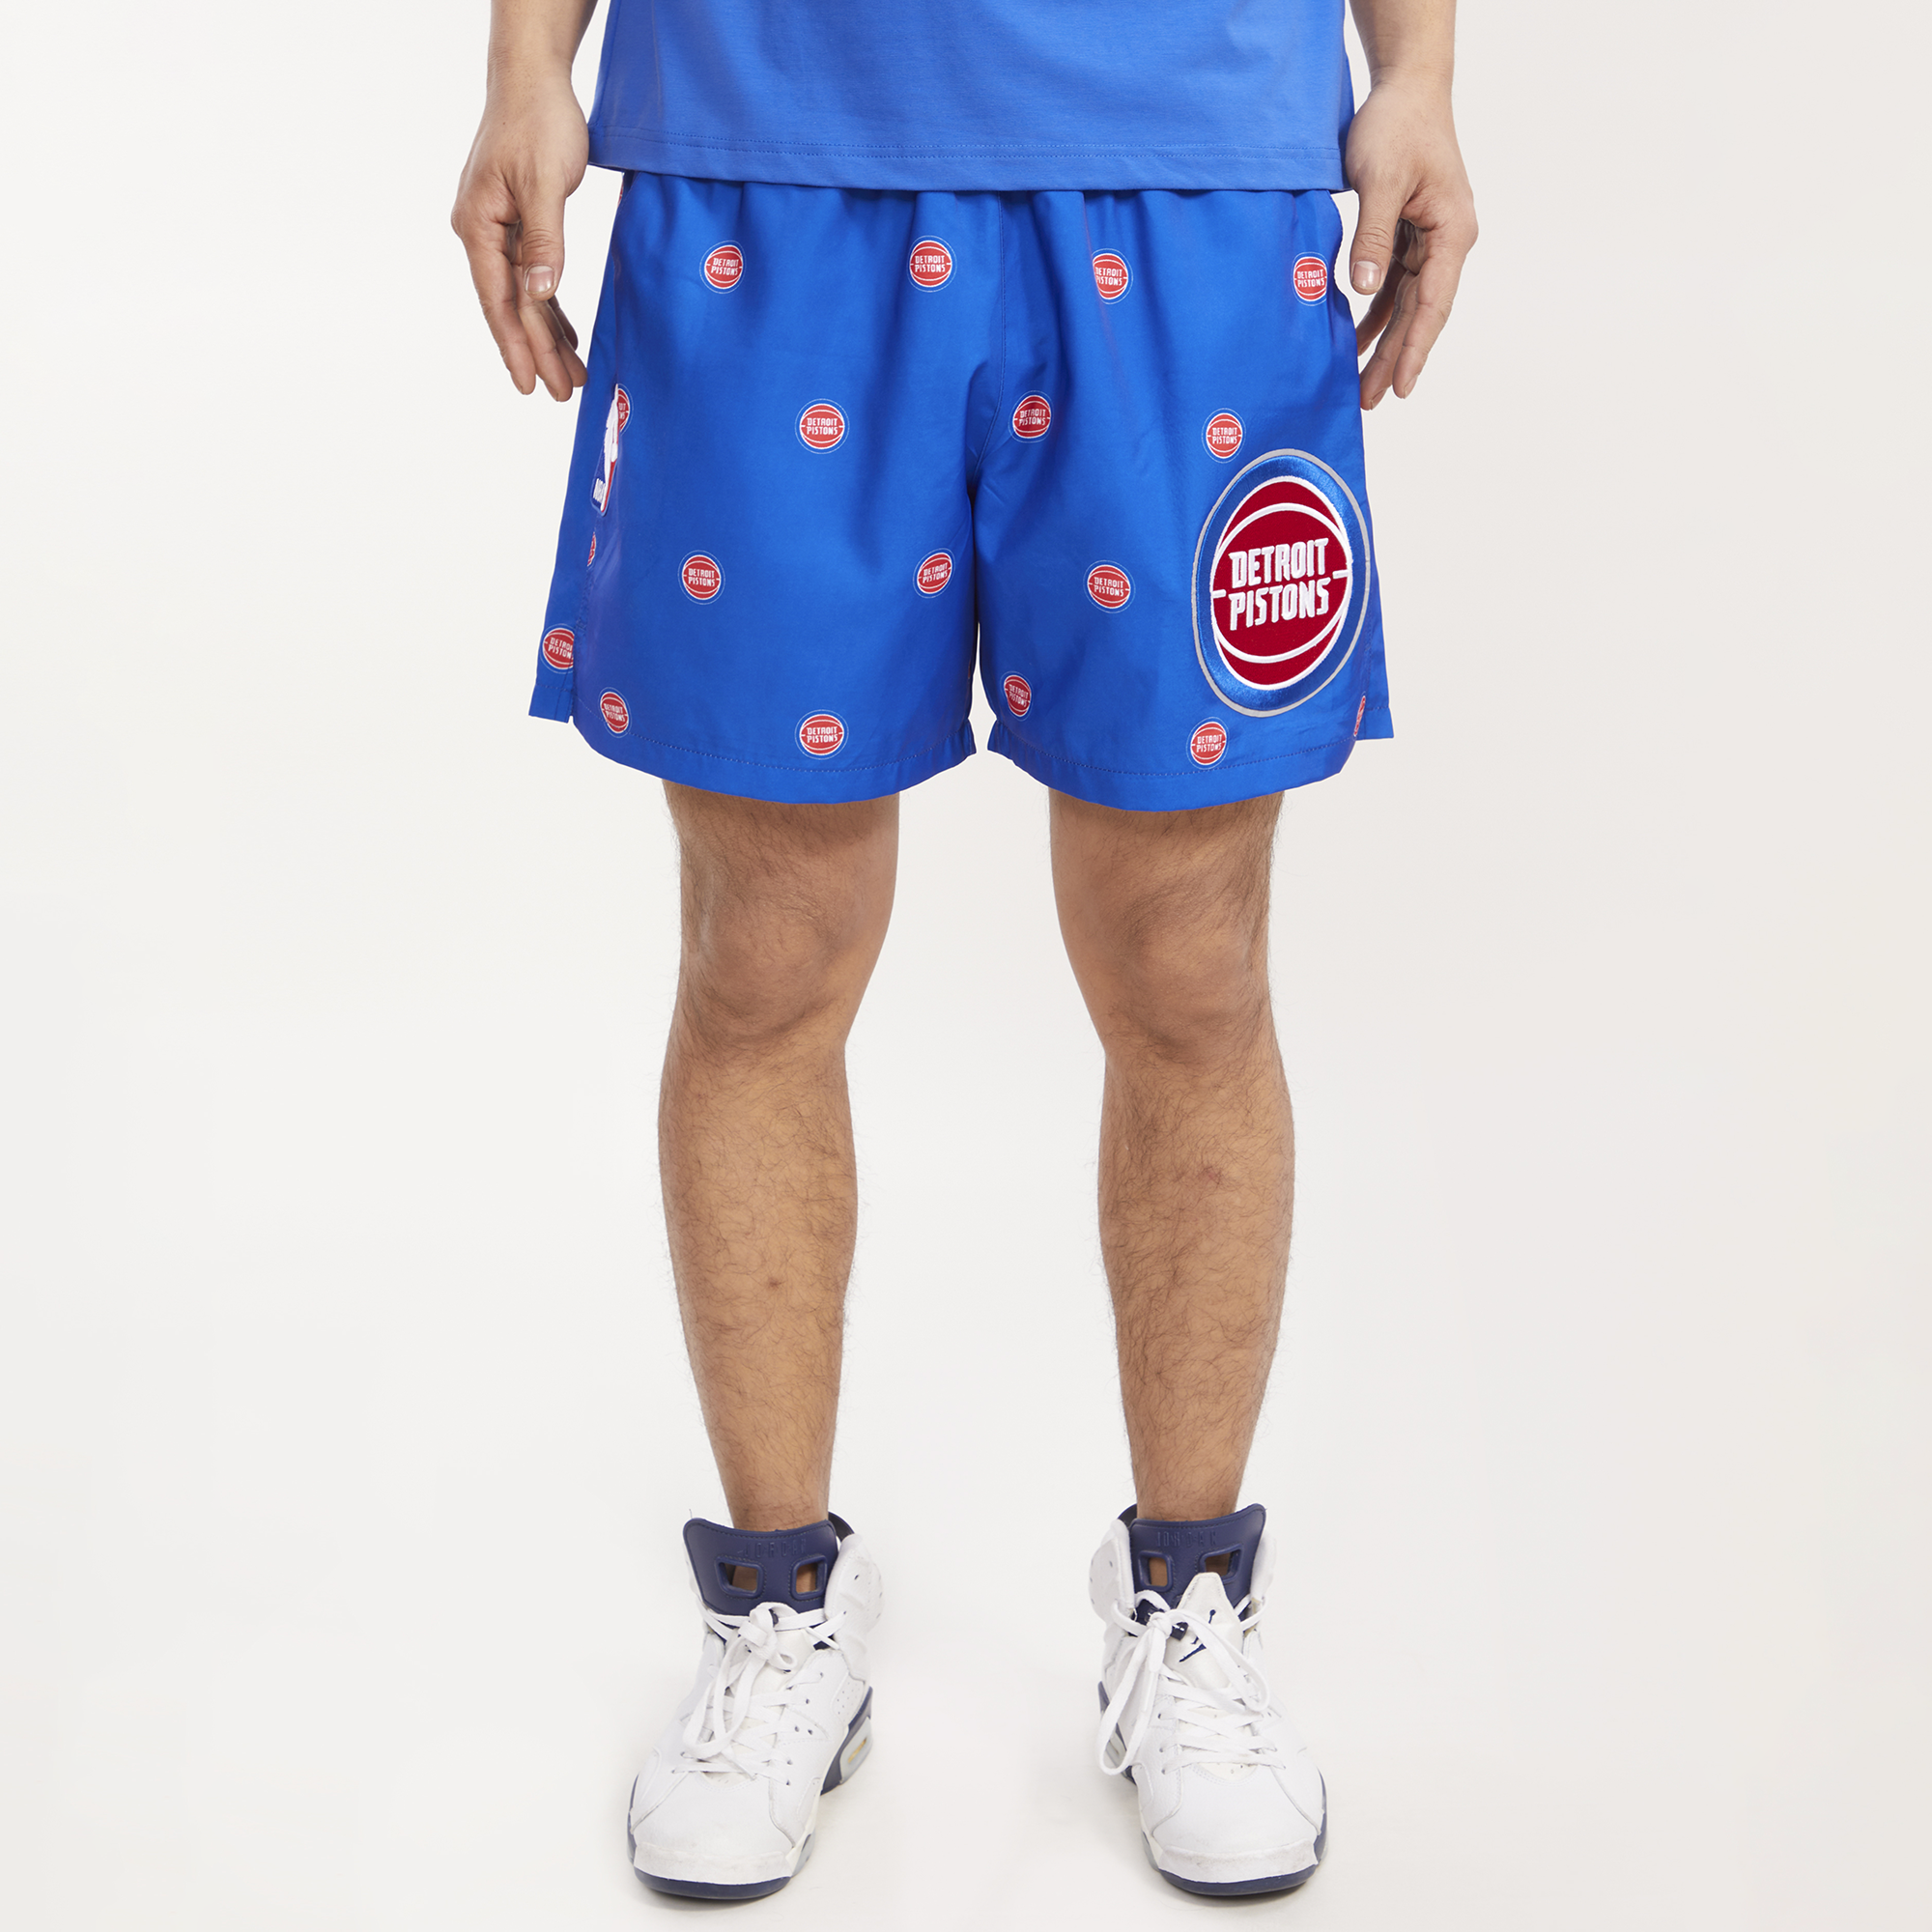 Pistons basketball shorts